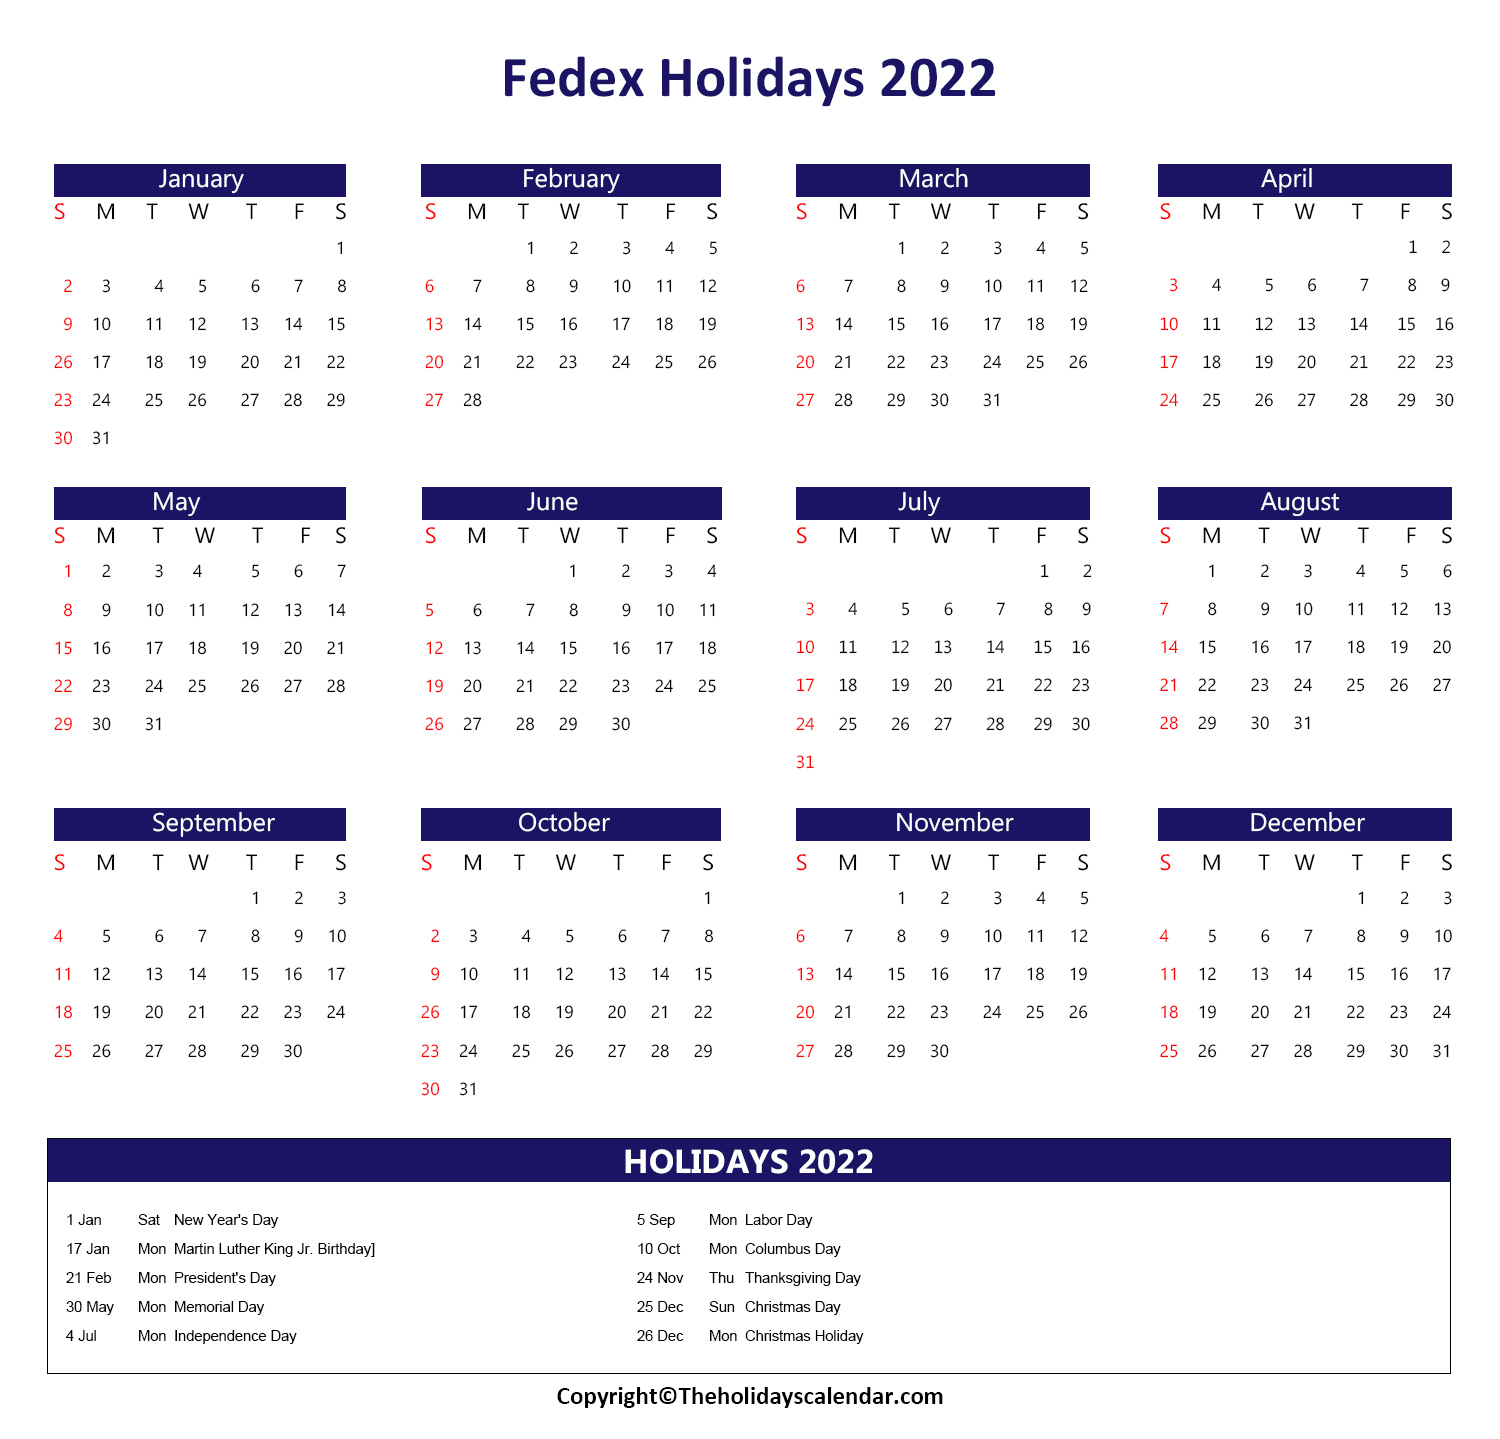 FedEx Holidays 2022 USA Archives - The Holidays Calendar